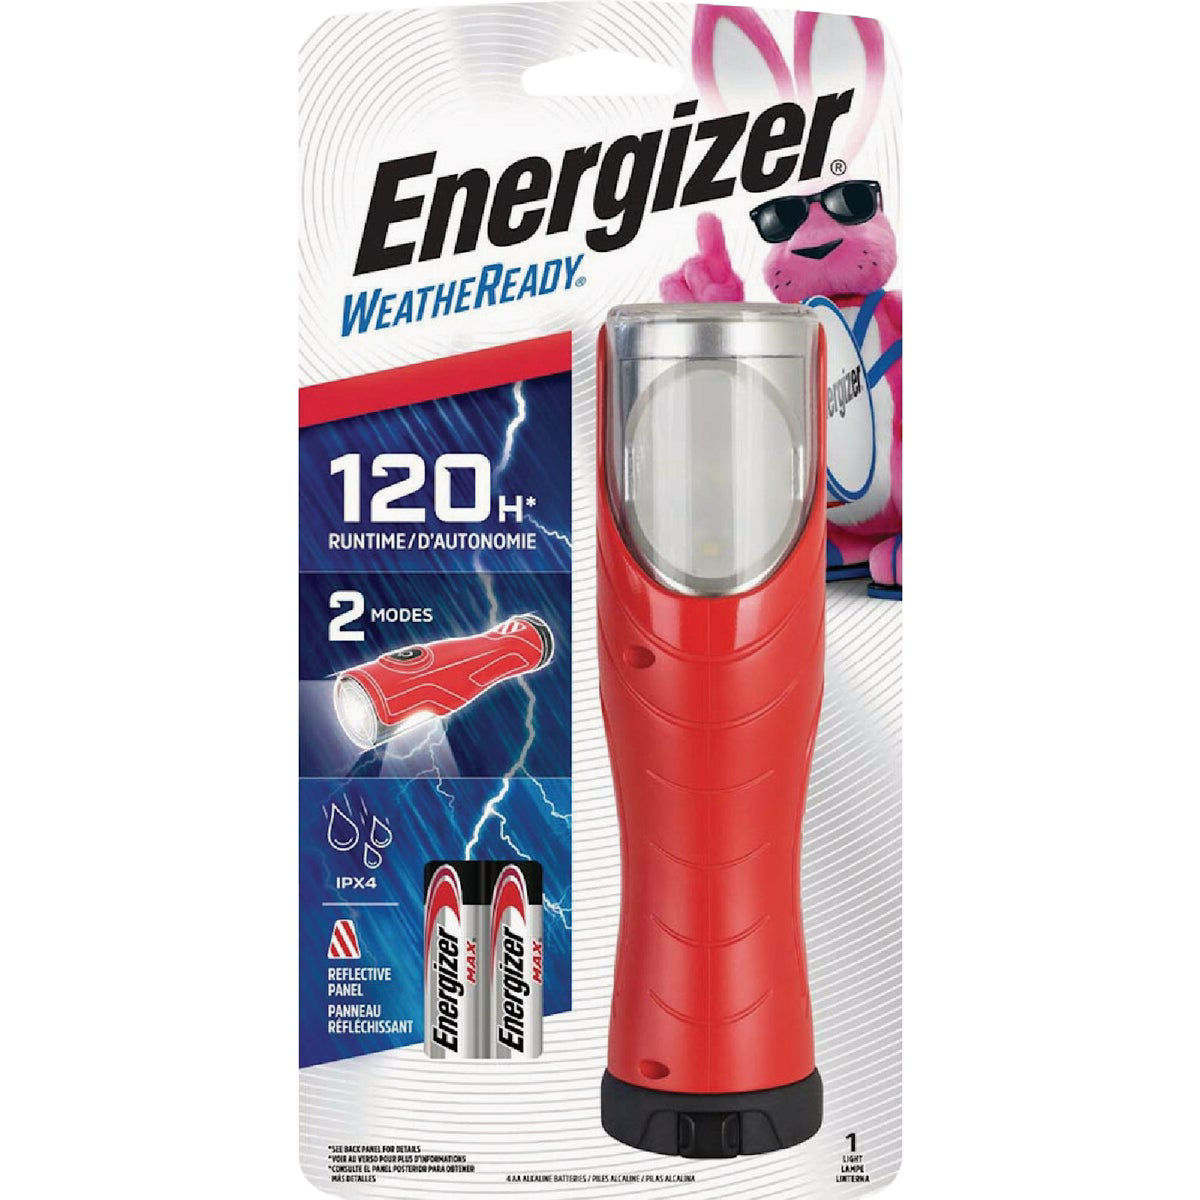 Energizer Weather Ready Multi-Function Lantern Review 